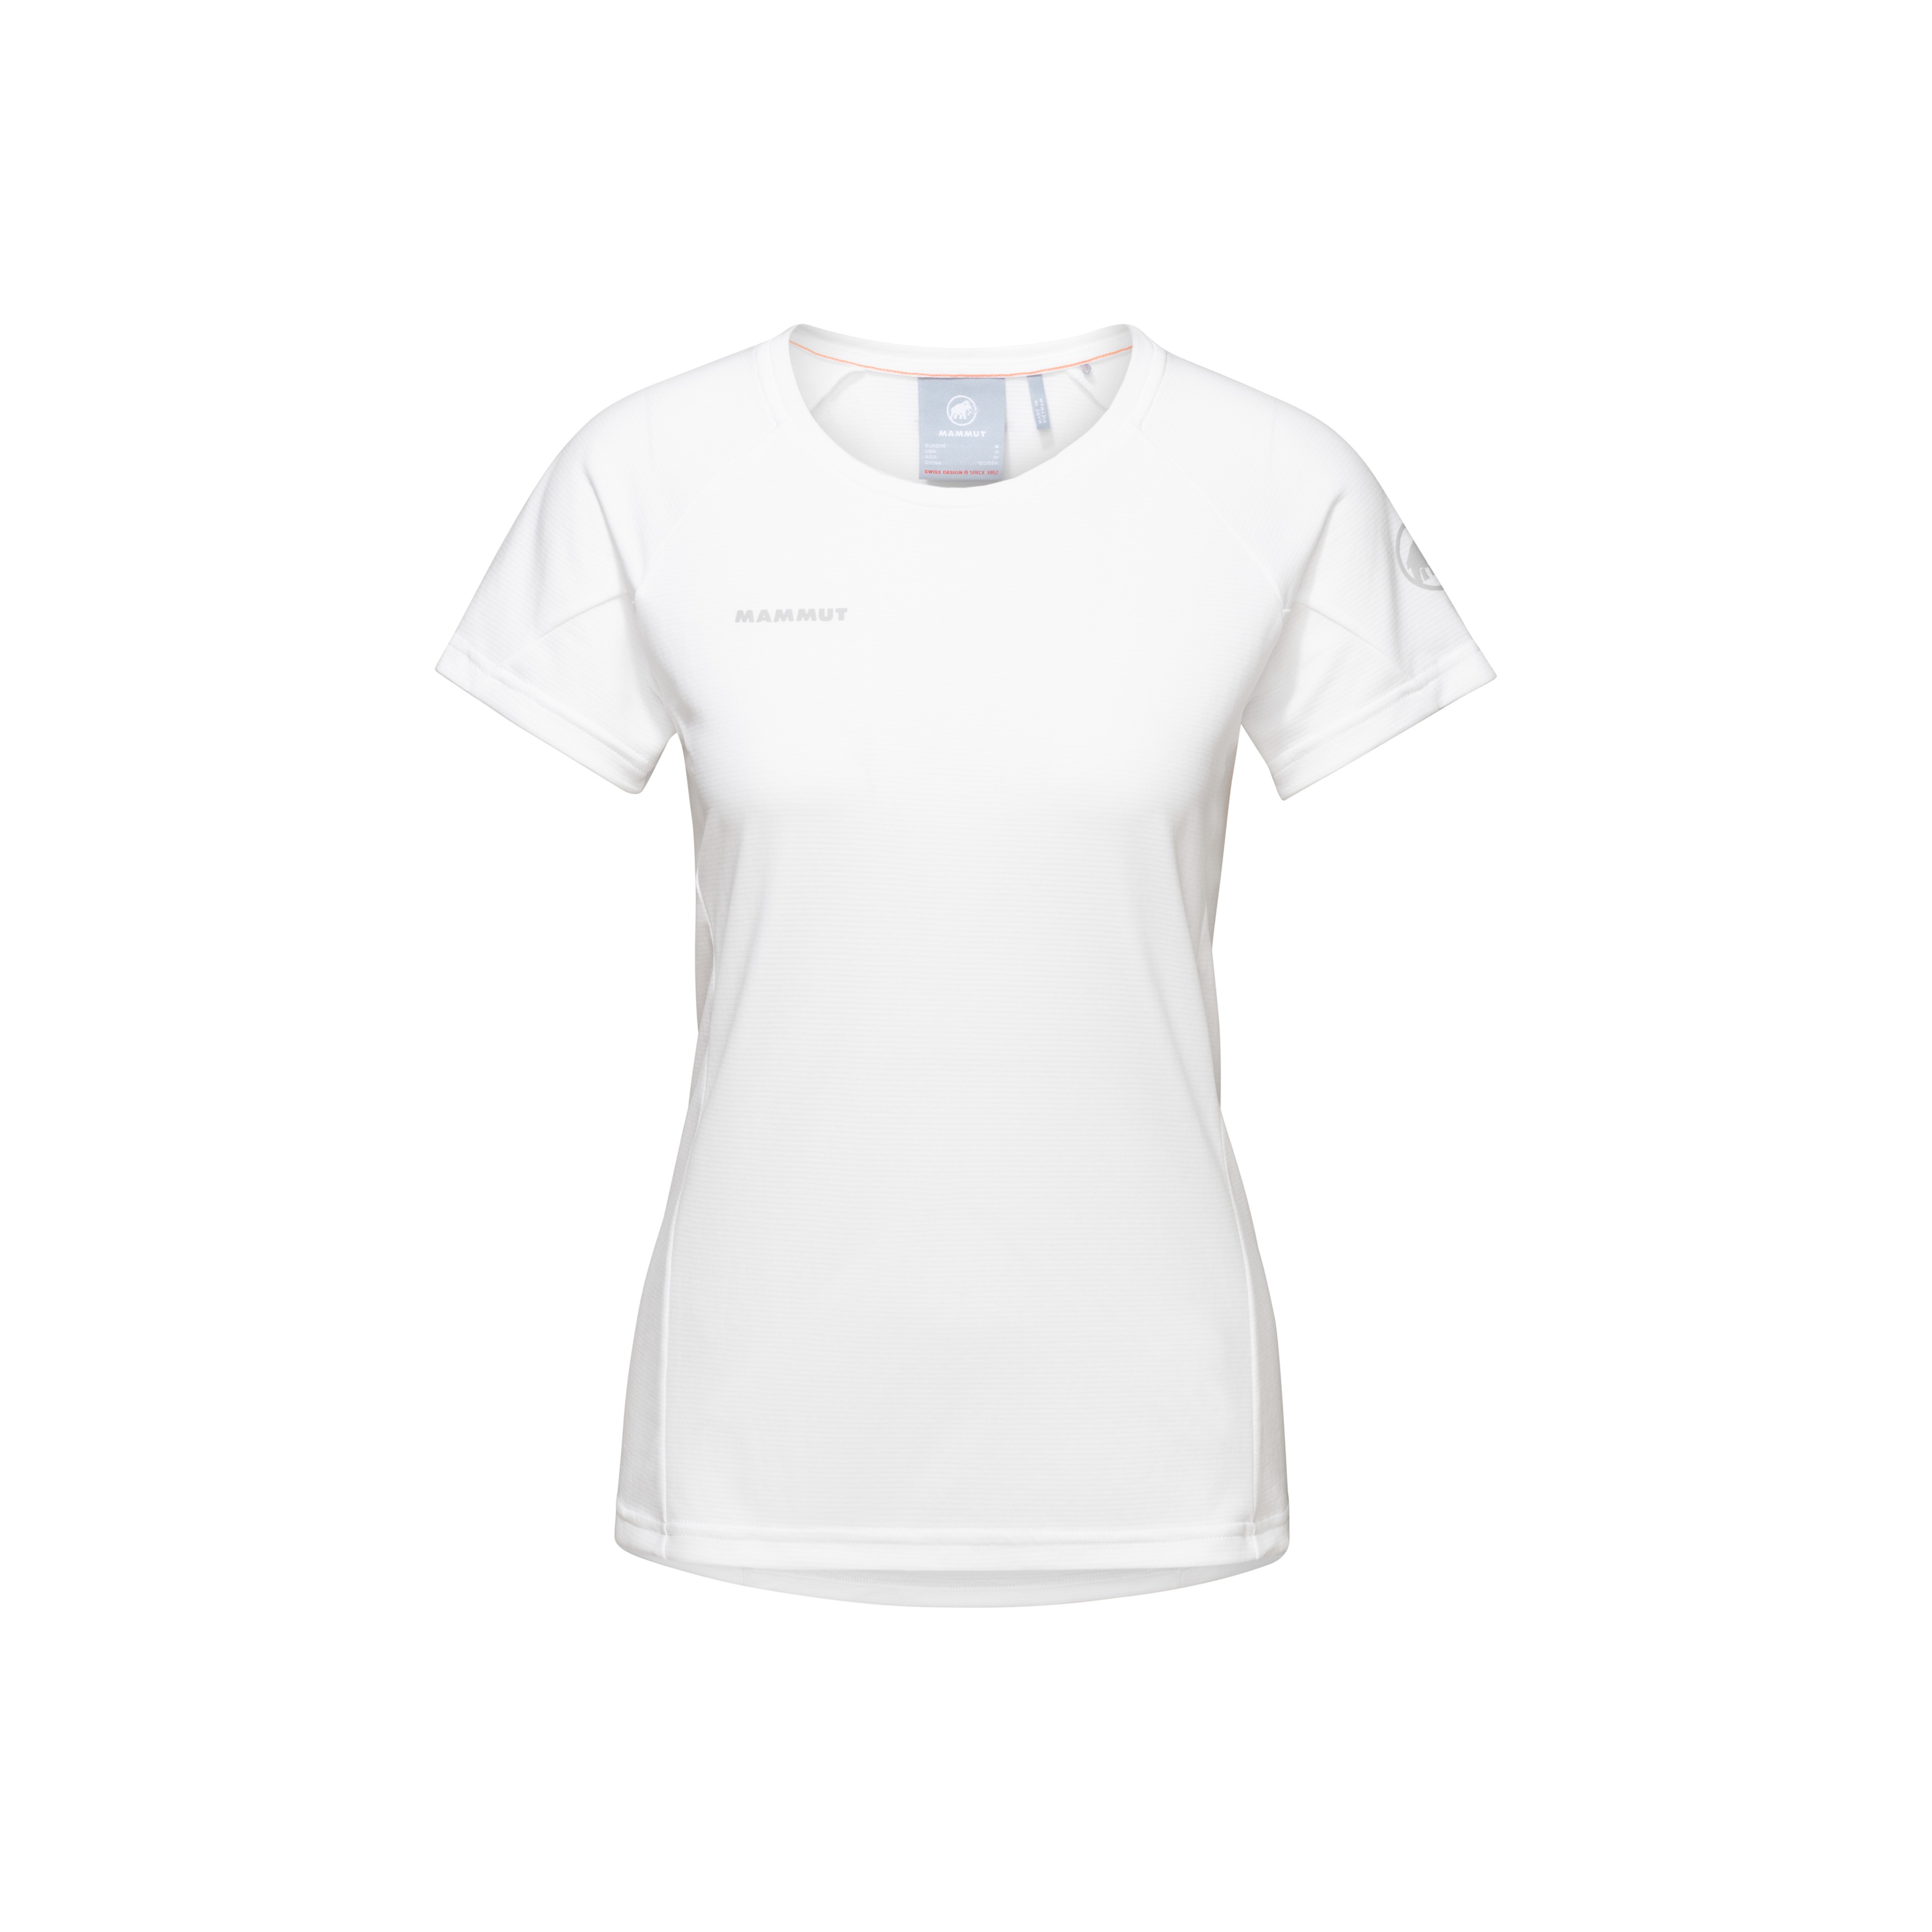 Aegility FL T-Shirt Women - white, XS thumbnail